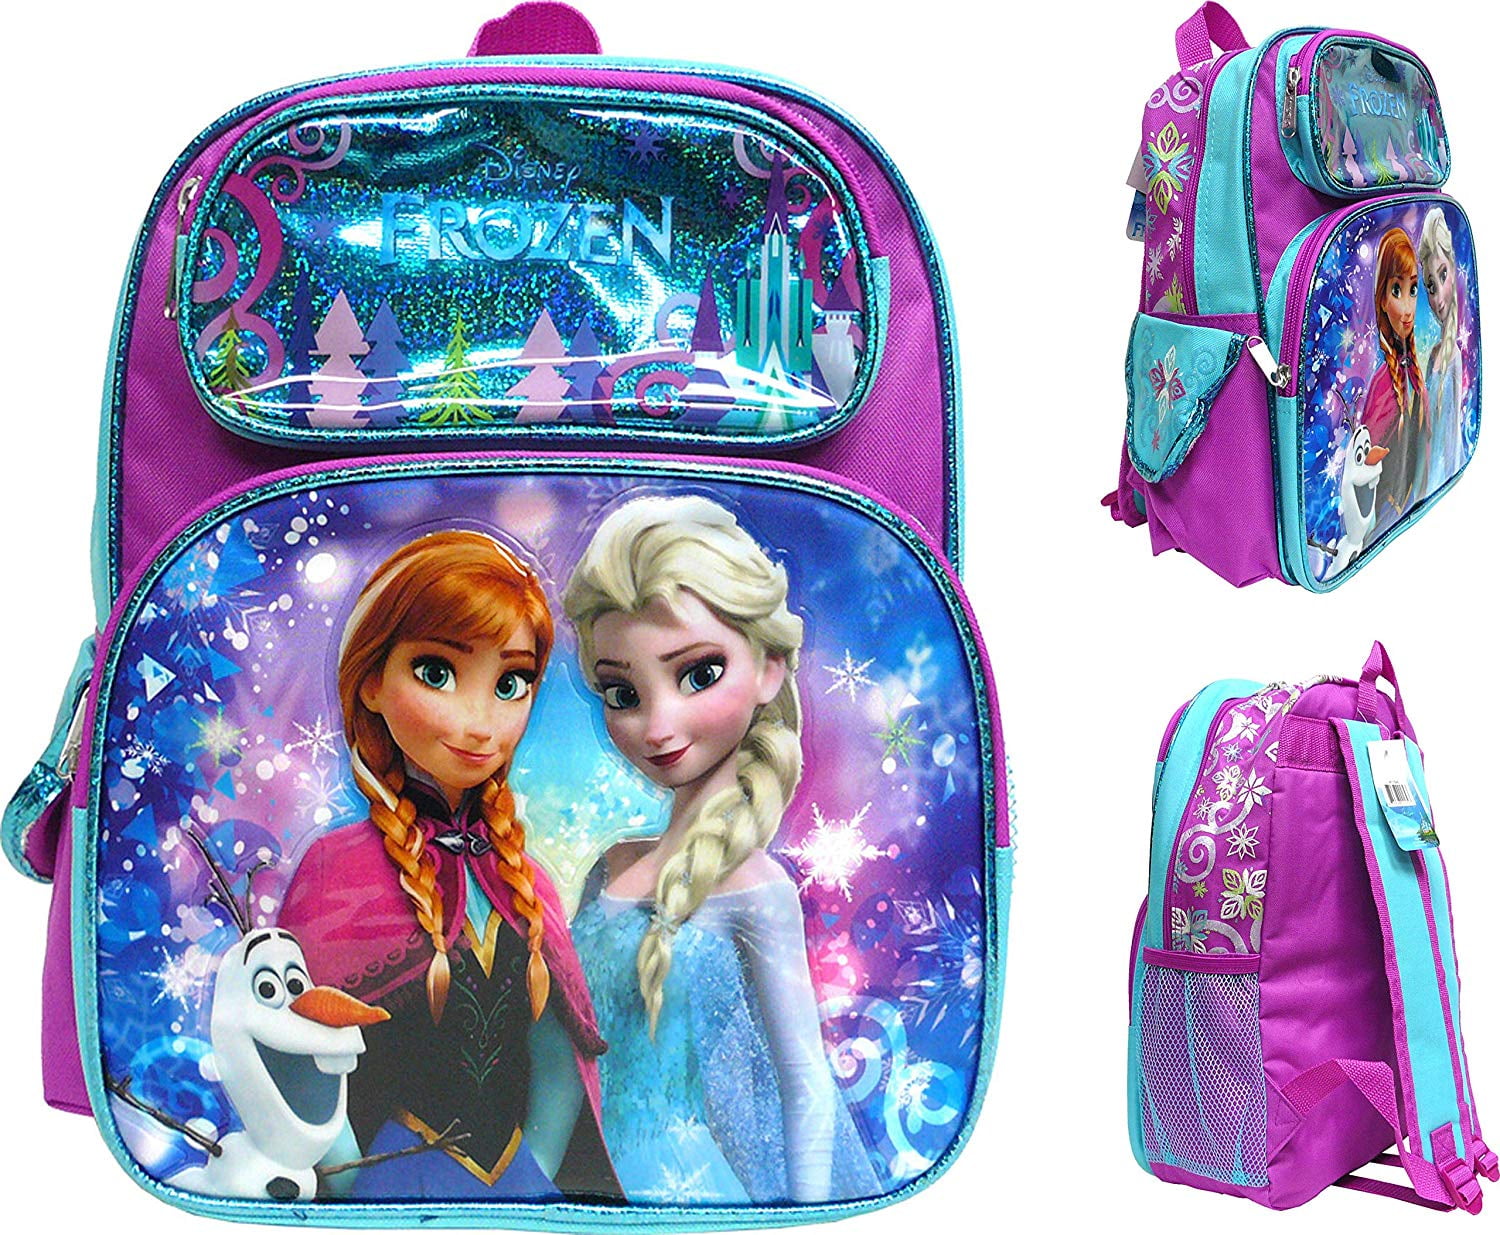 Disney Frozen Elsa Anna Icy Glow Childrens Kids Backpack Rucksack School Bag 